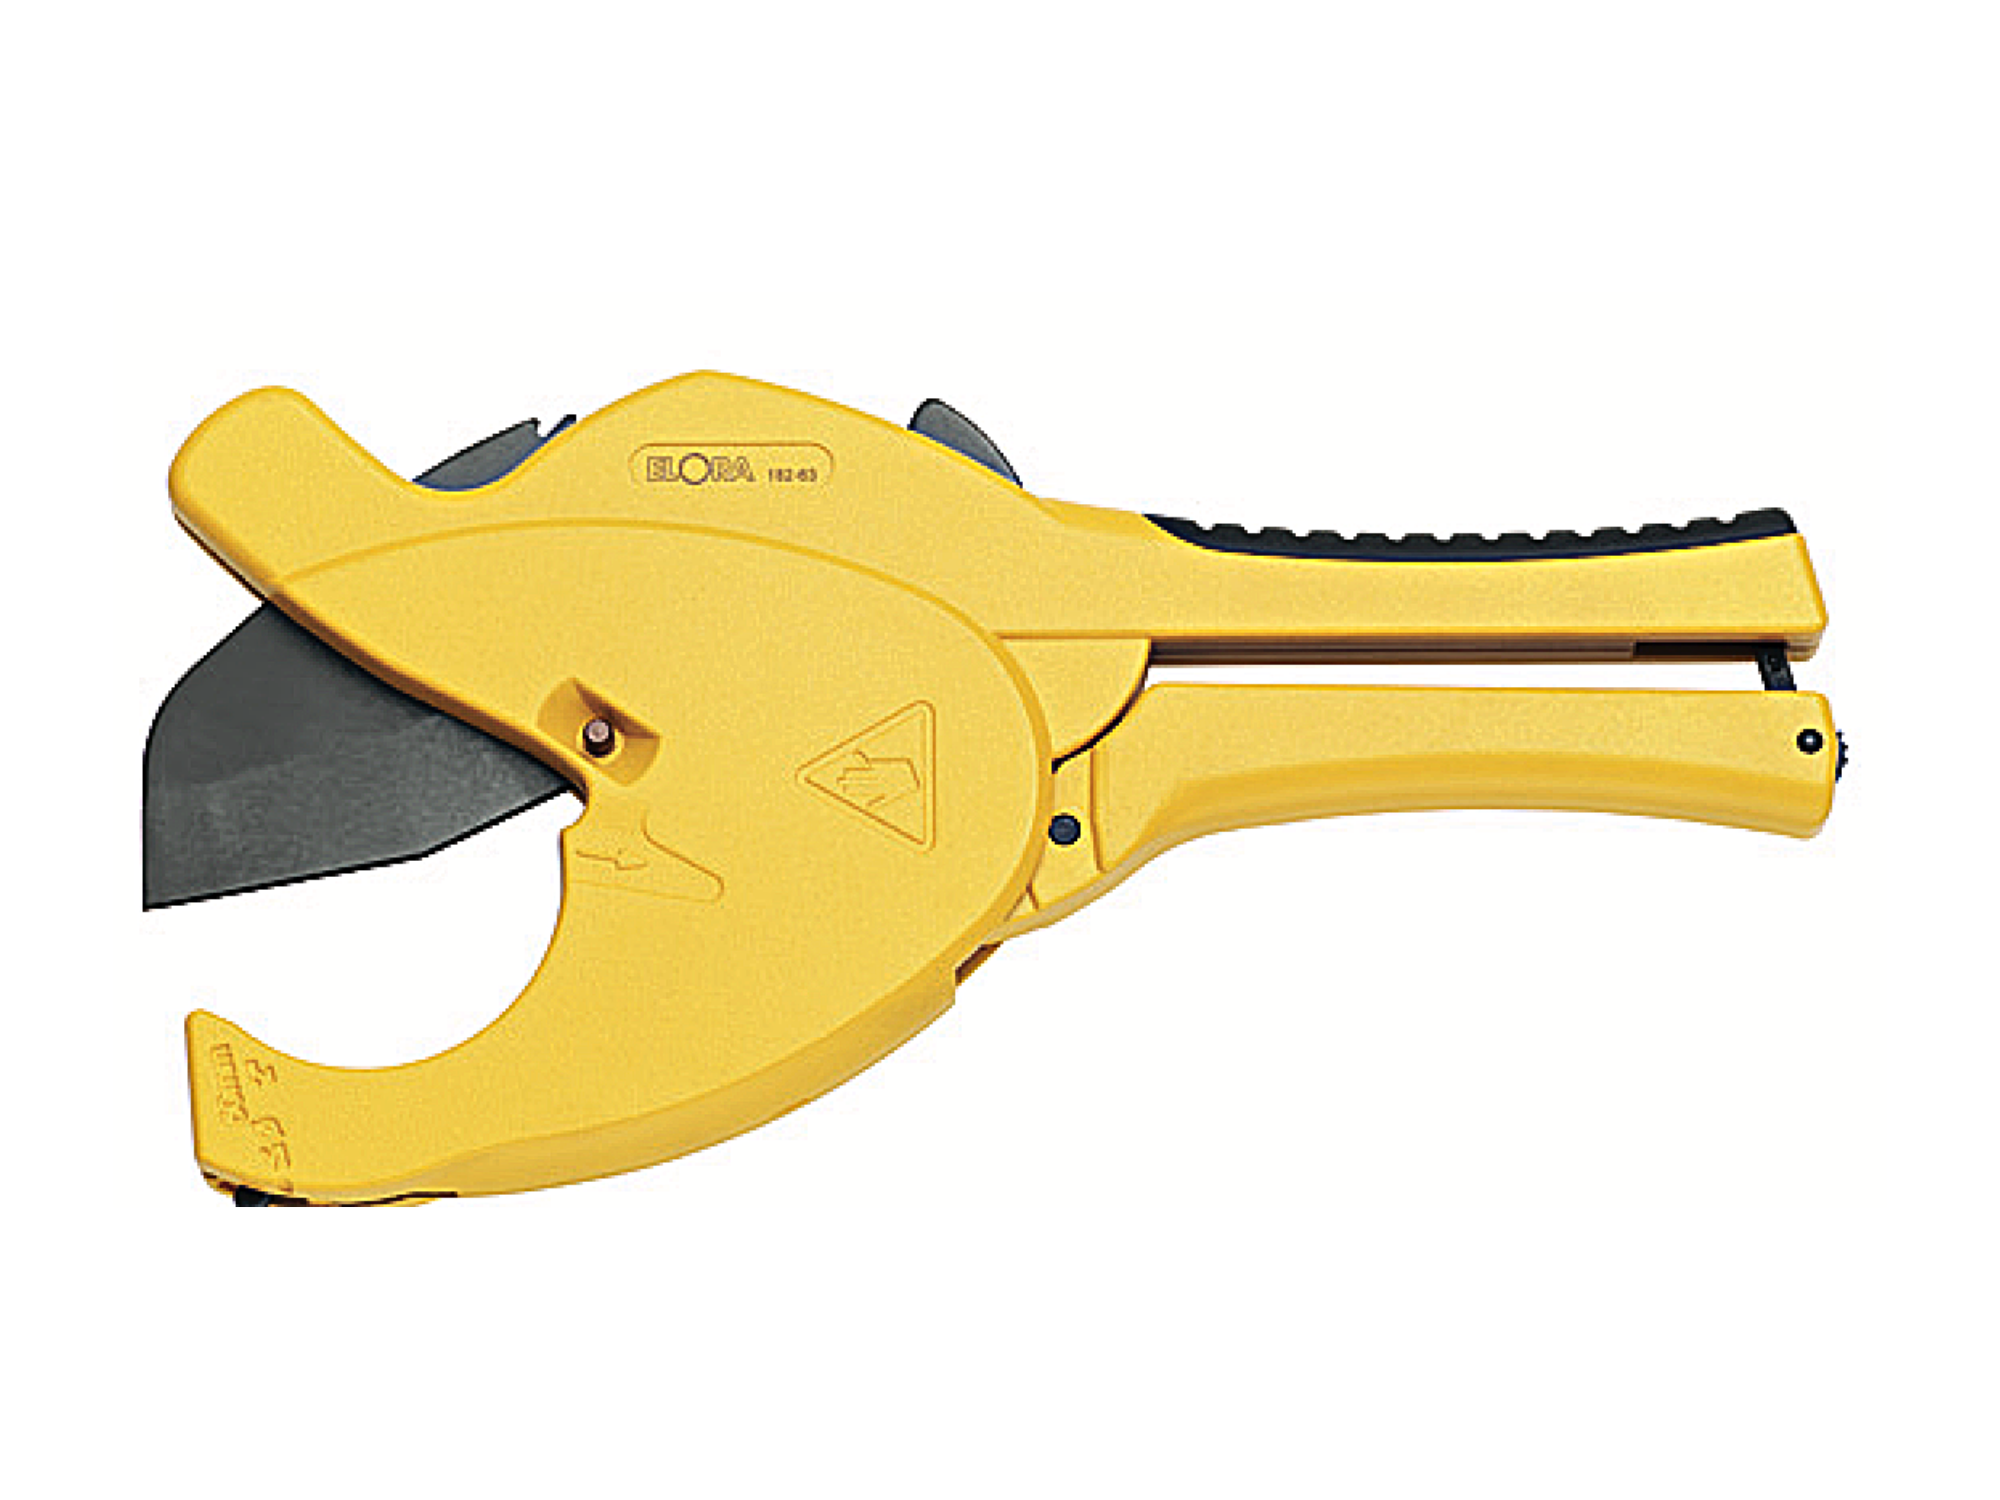 ELORA 182-E 63 Plastic Pipe Cutter/Scissors Spare Blade - Premium Pipe Cutter from ELORA - Shop now at Yew Aik.